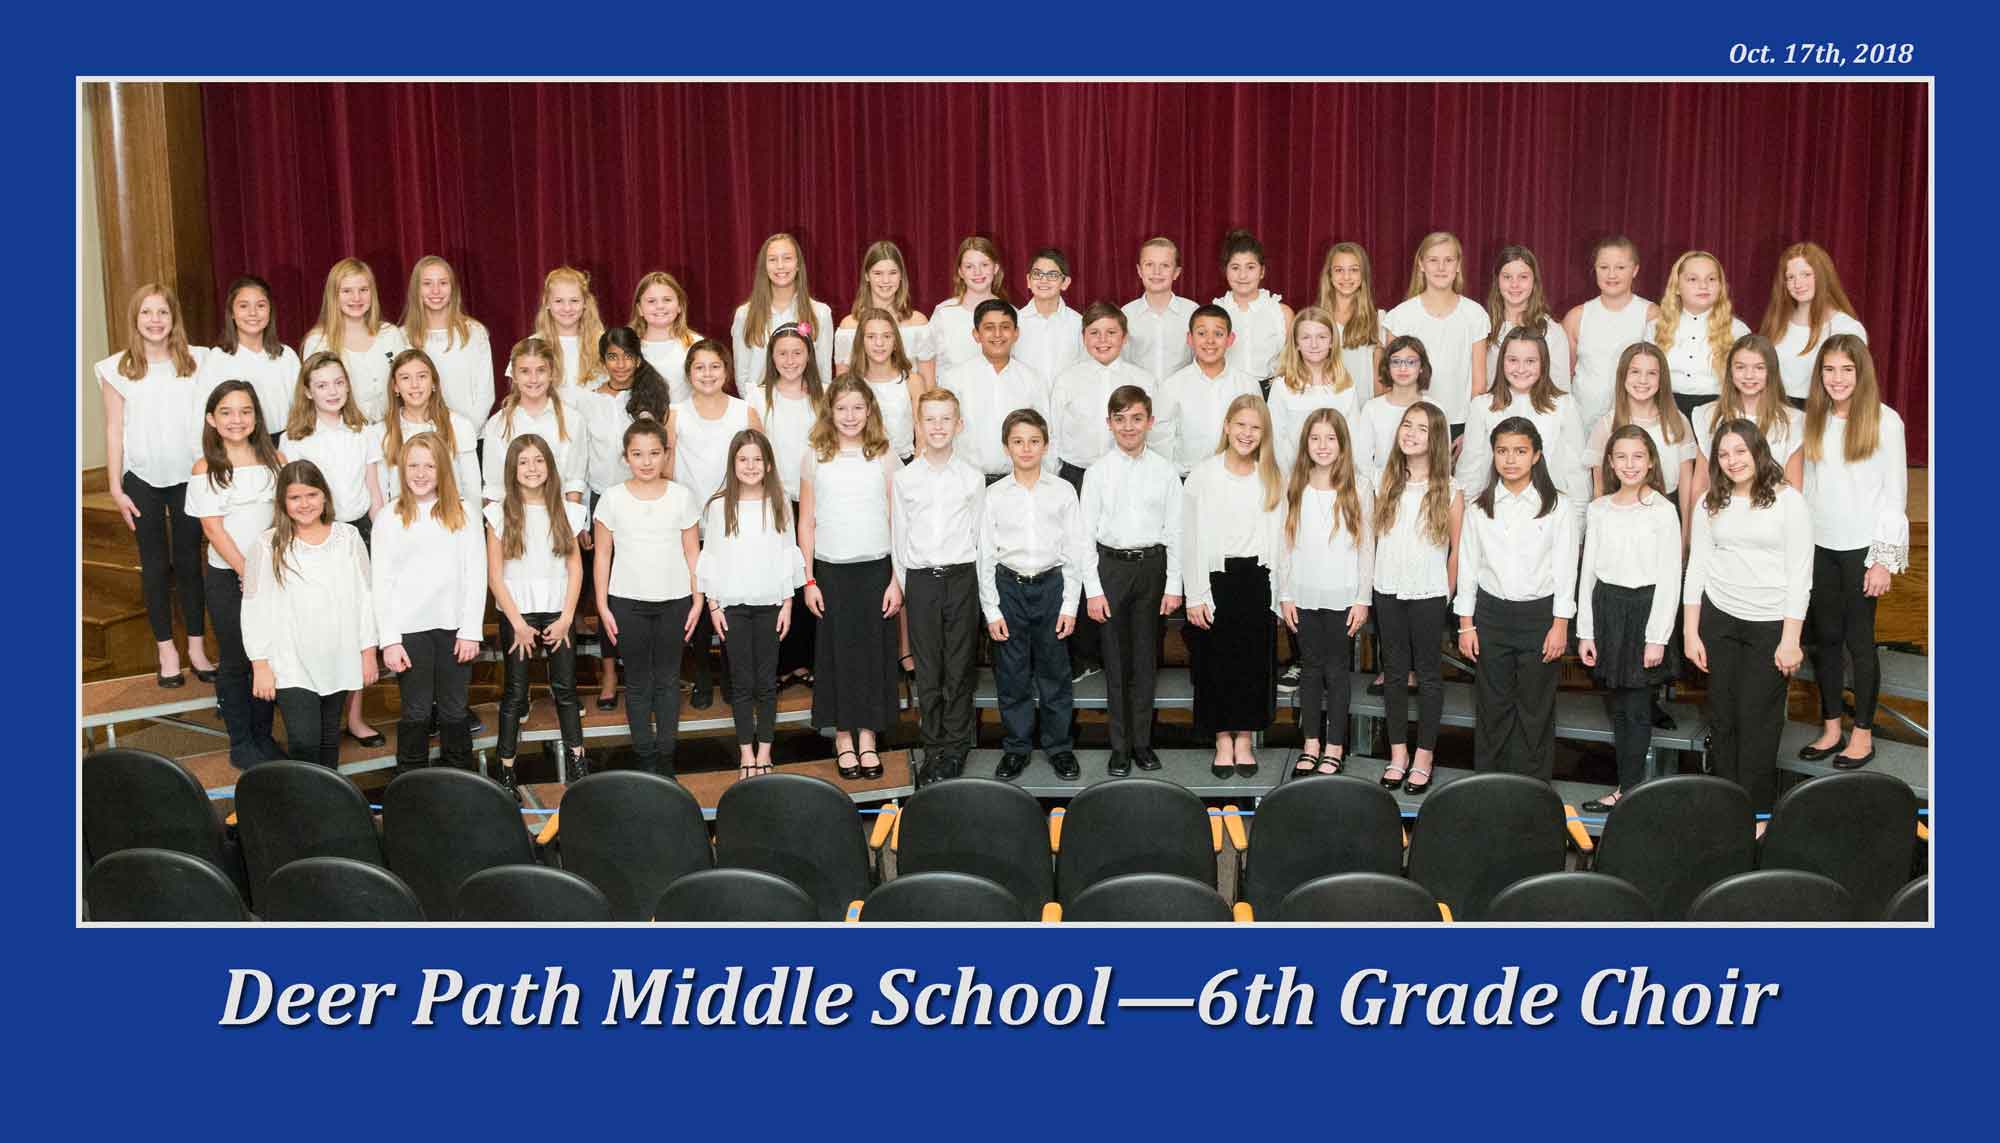 Dear Path Middle School Choir Group Photo by Tom Killoran